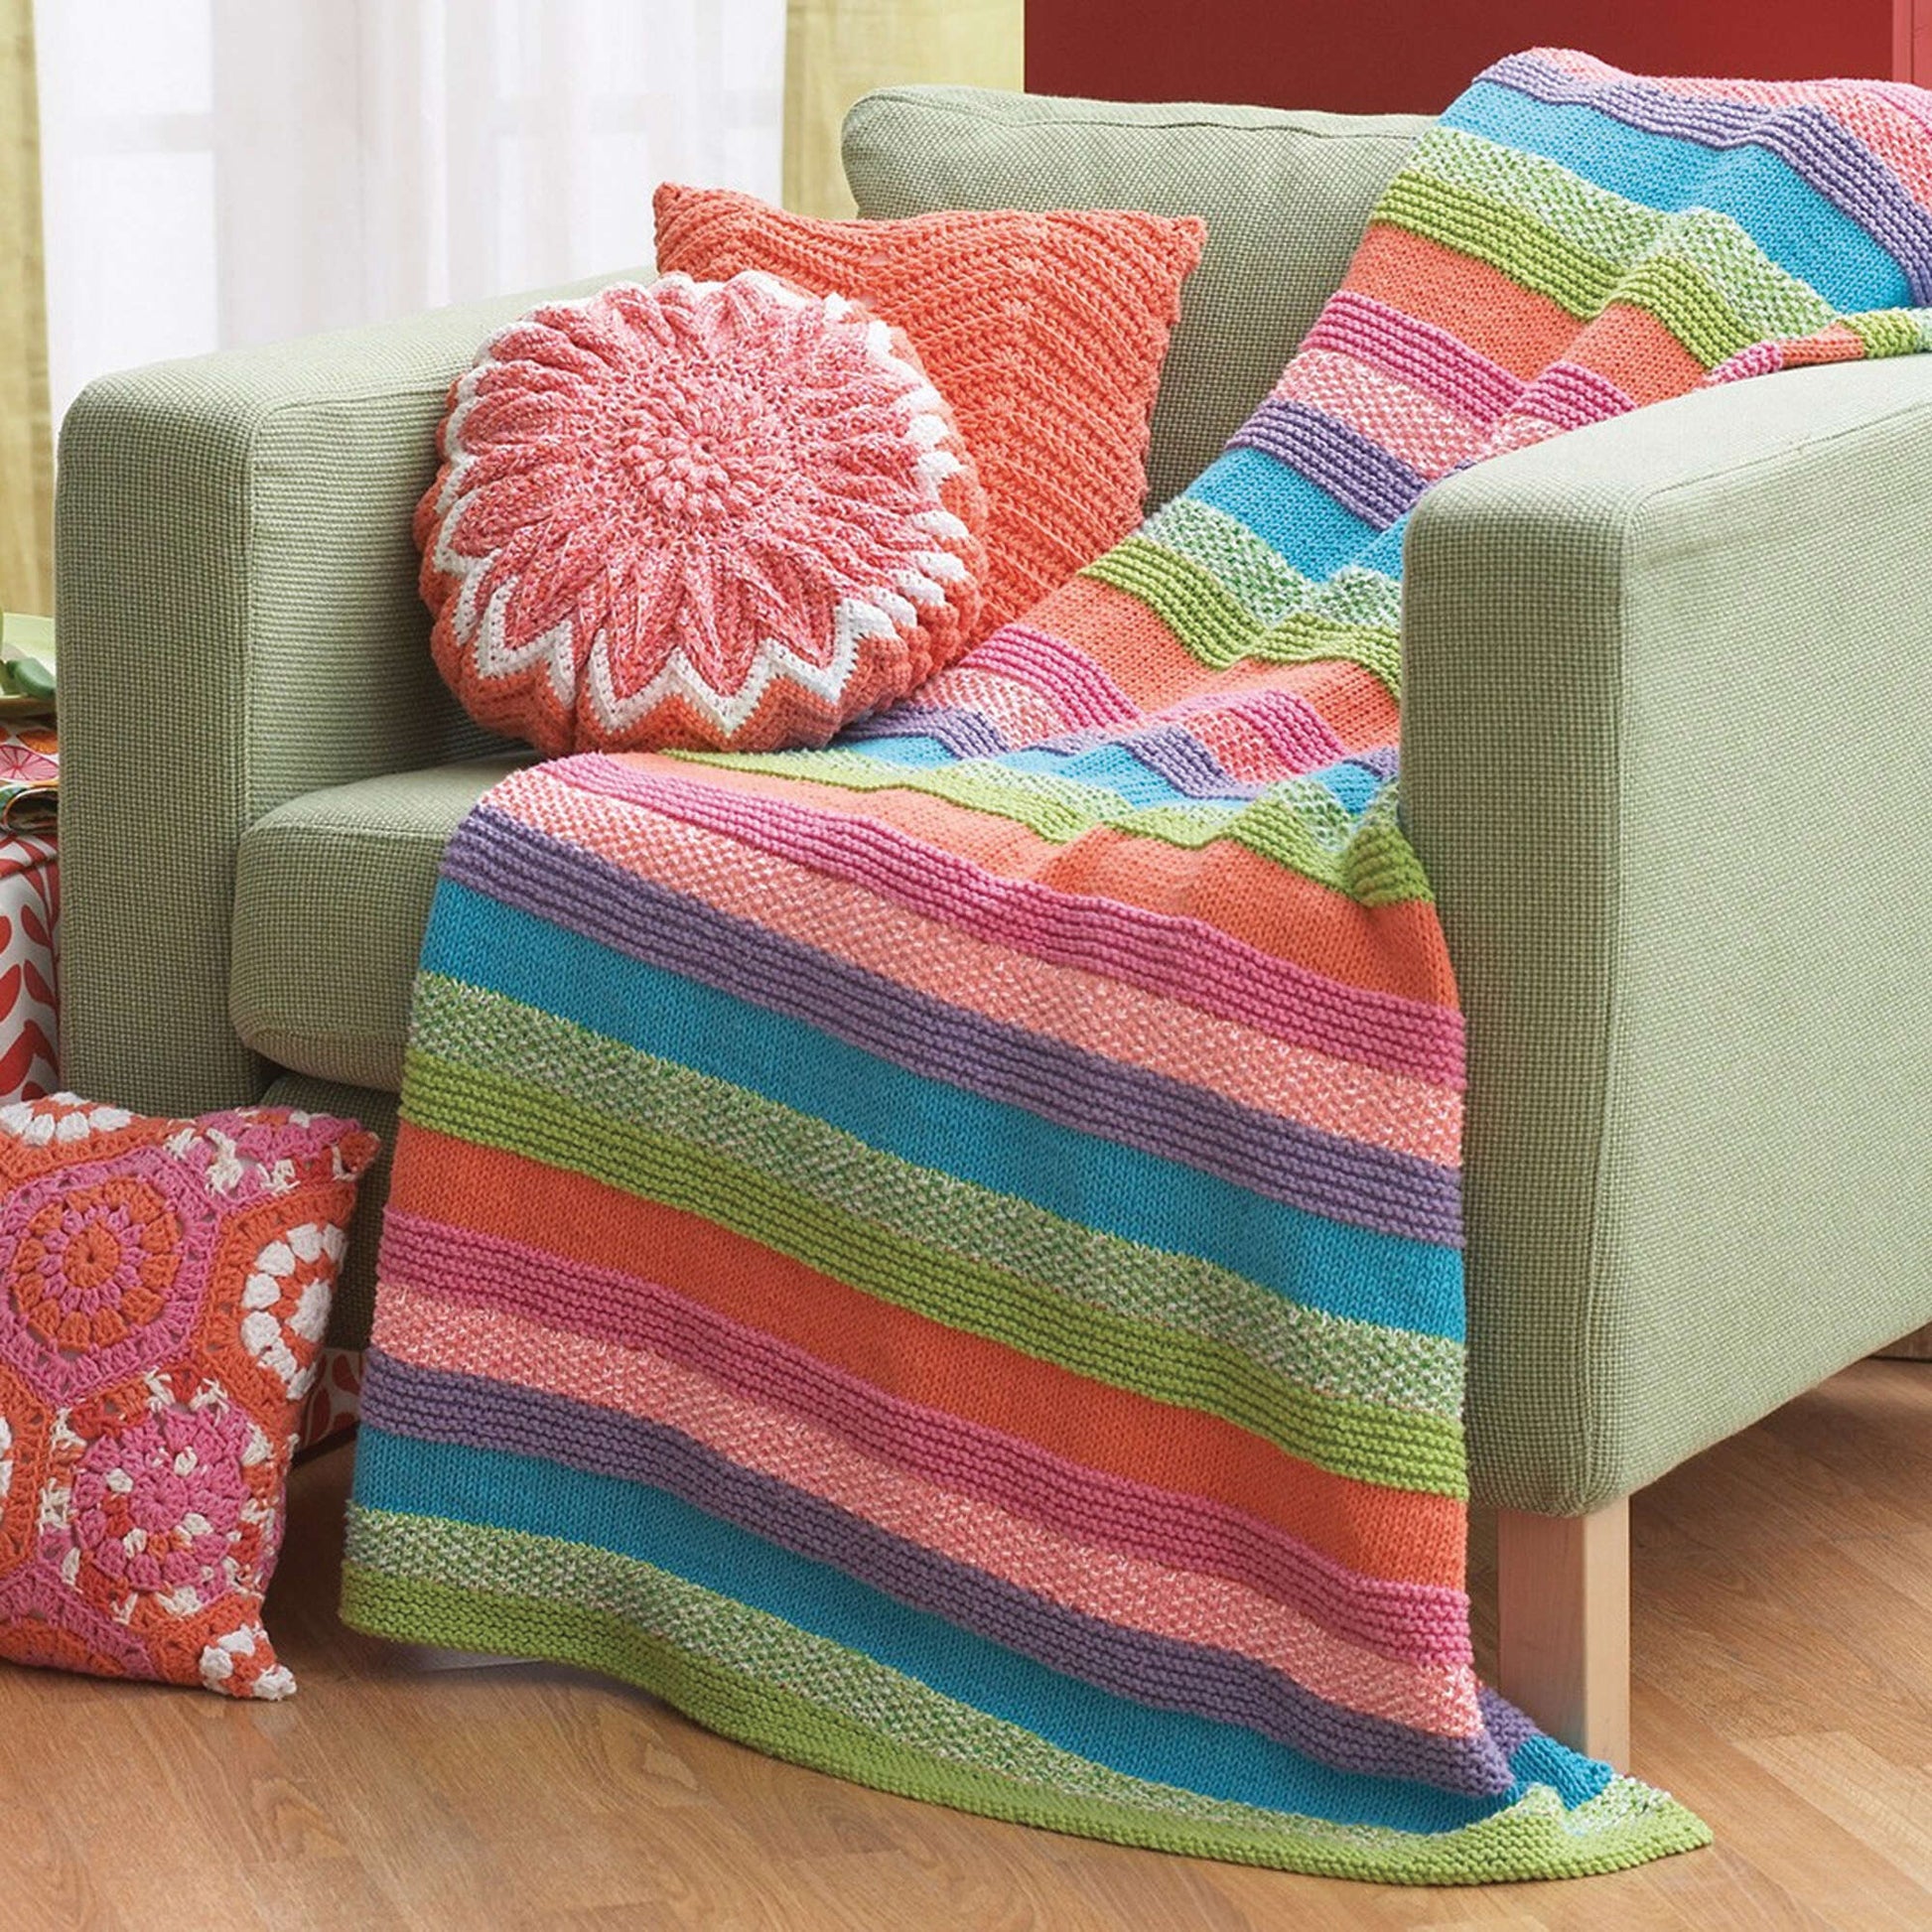 Free Lily Sugar'n Cream Striped Knit Blanket Pattern